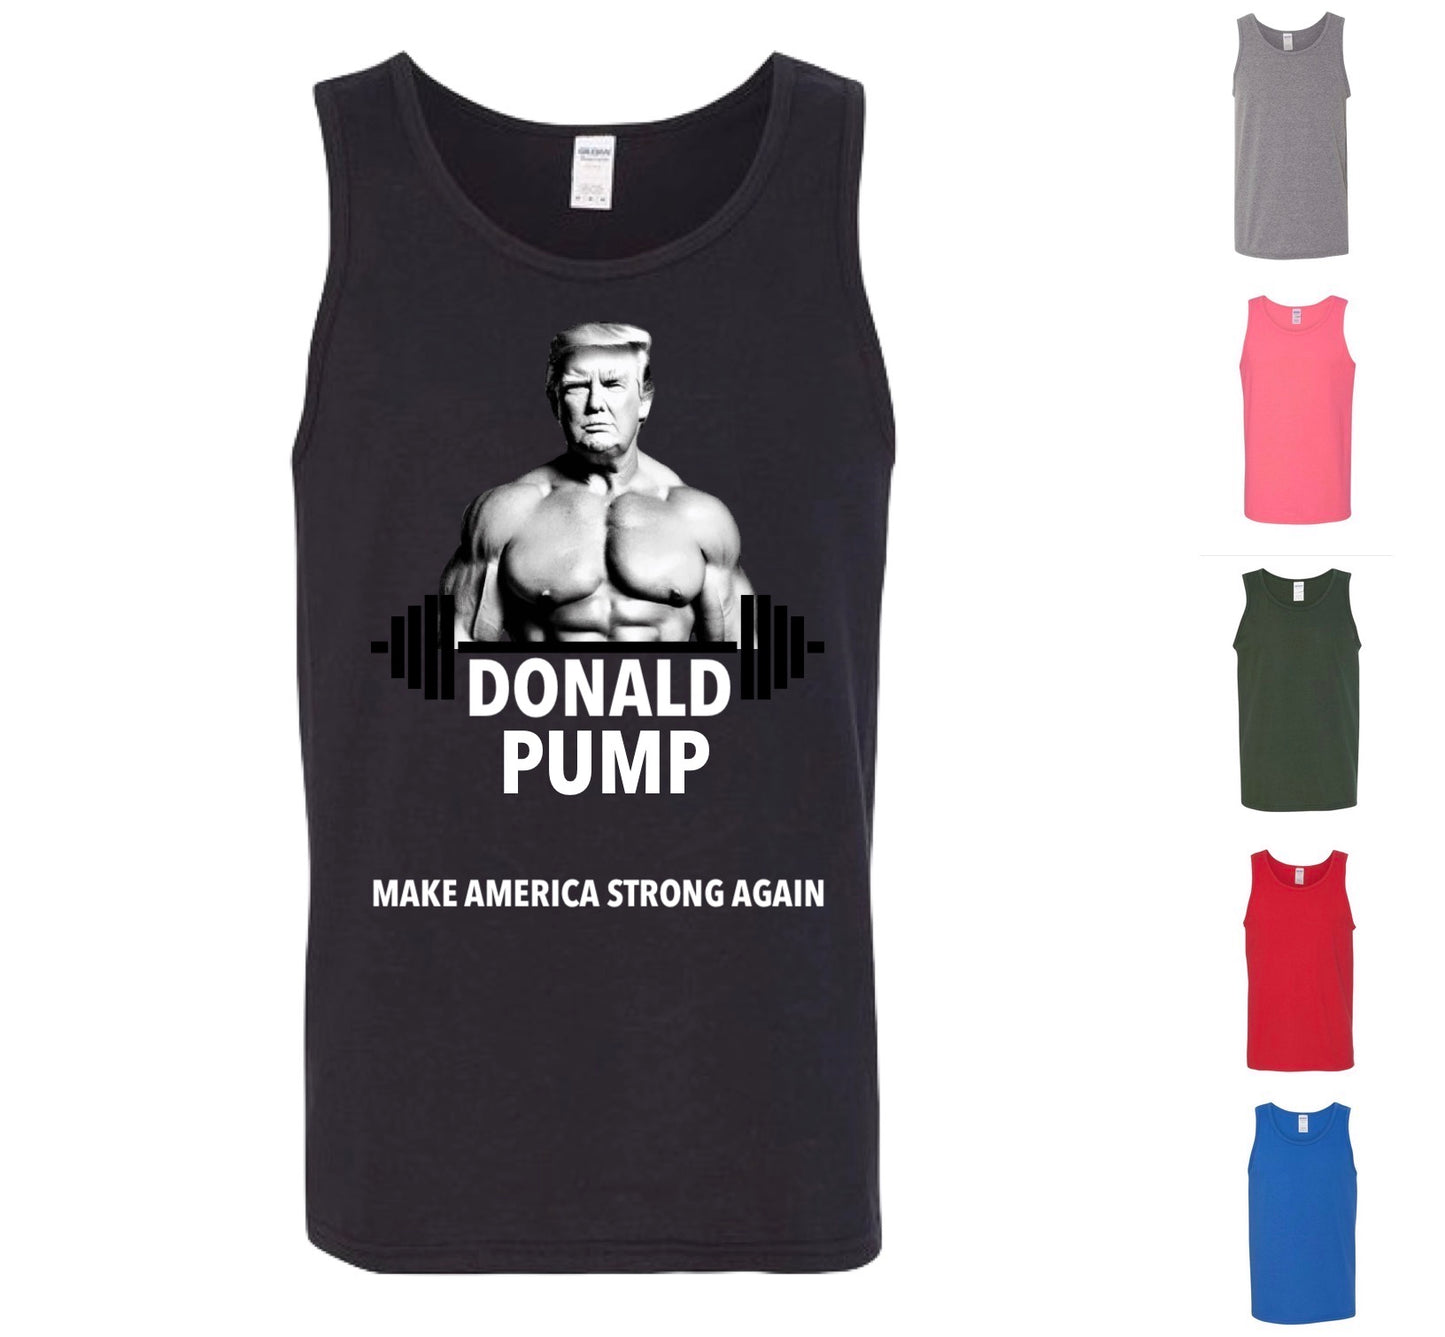 Donald PUMP - Make America Strong Again! (Free Shipping)